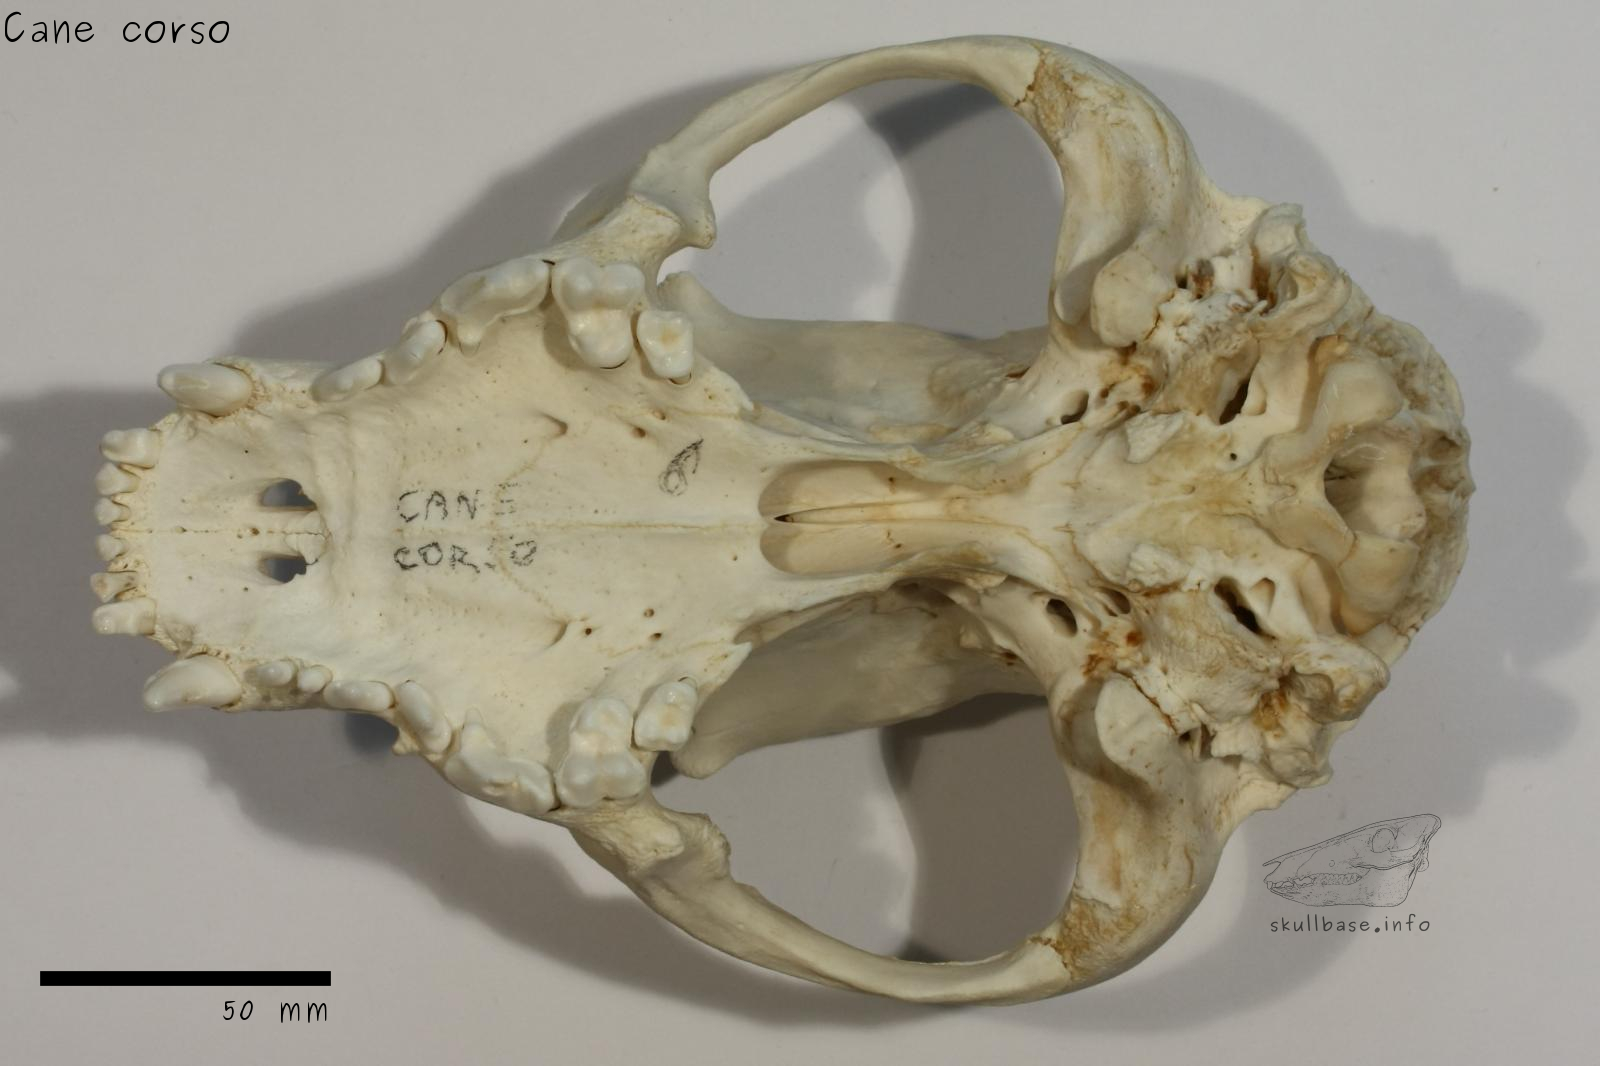 Cane corso (Canis lupus familiaris) skull ventral view